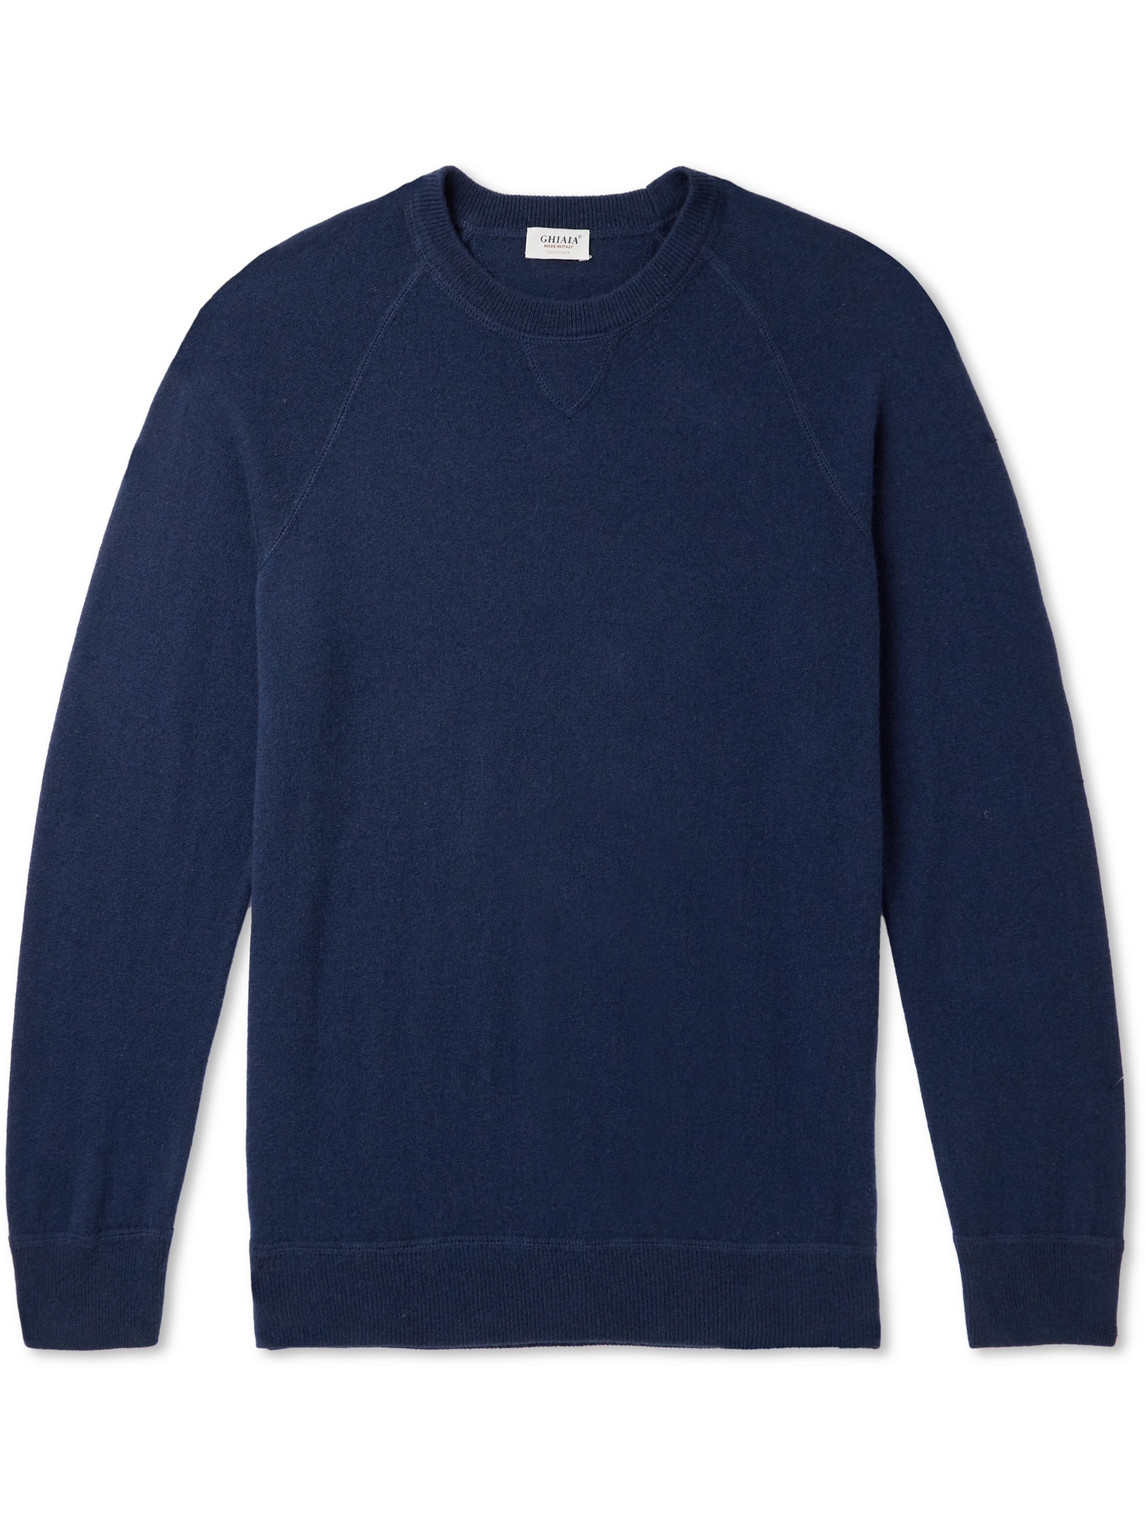 Ghiaia Cashmere Cahsmere Sweater In Blue